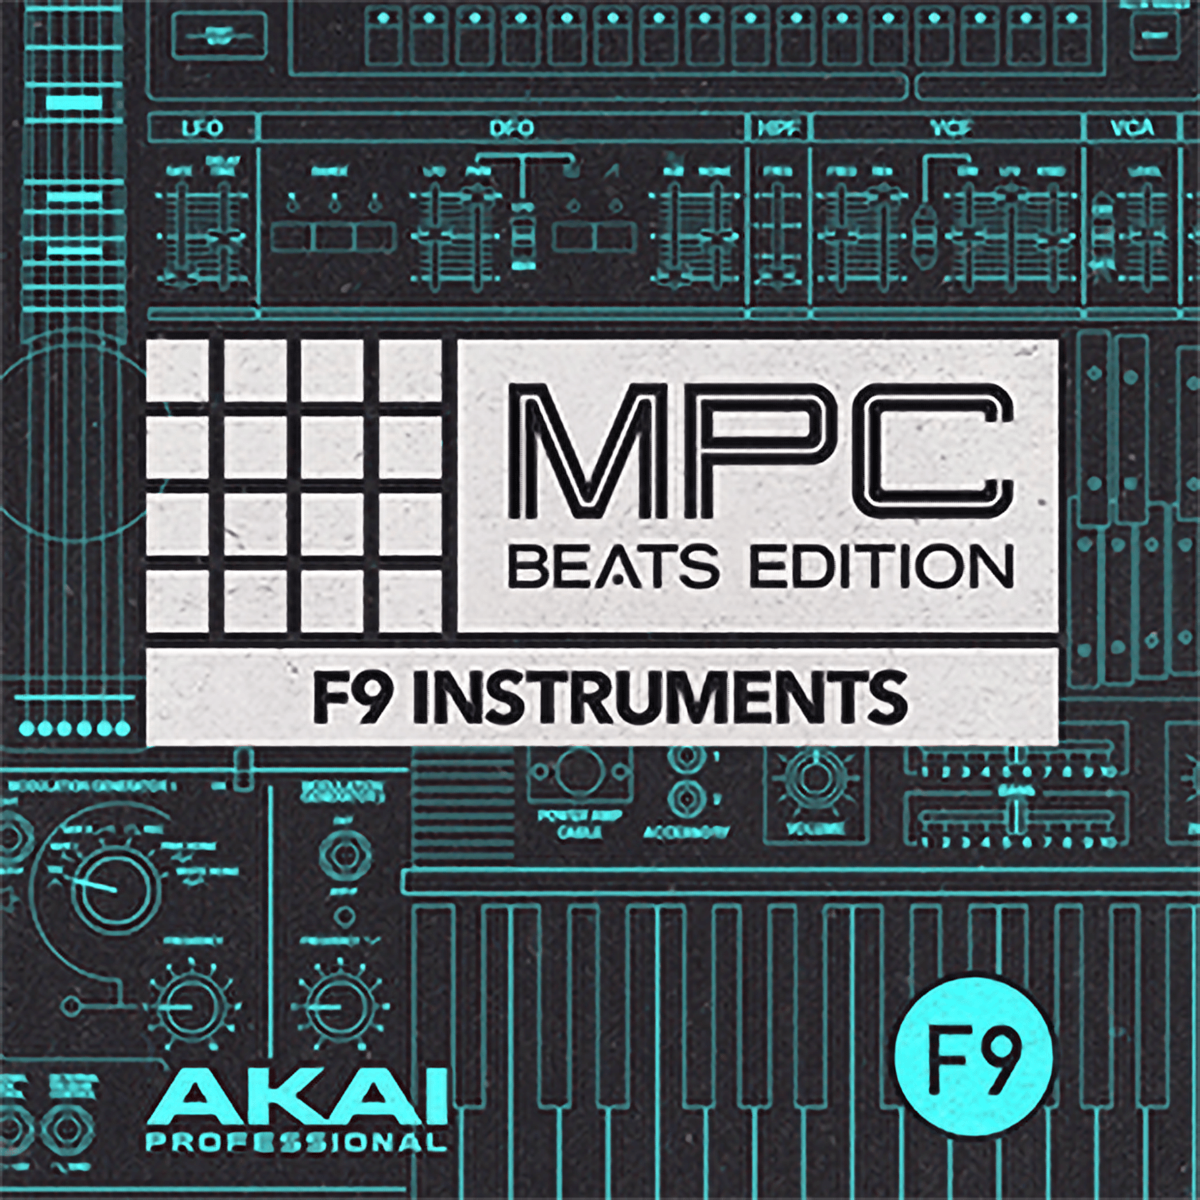 akai beat maker for mac